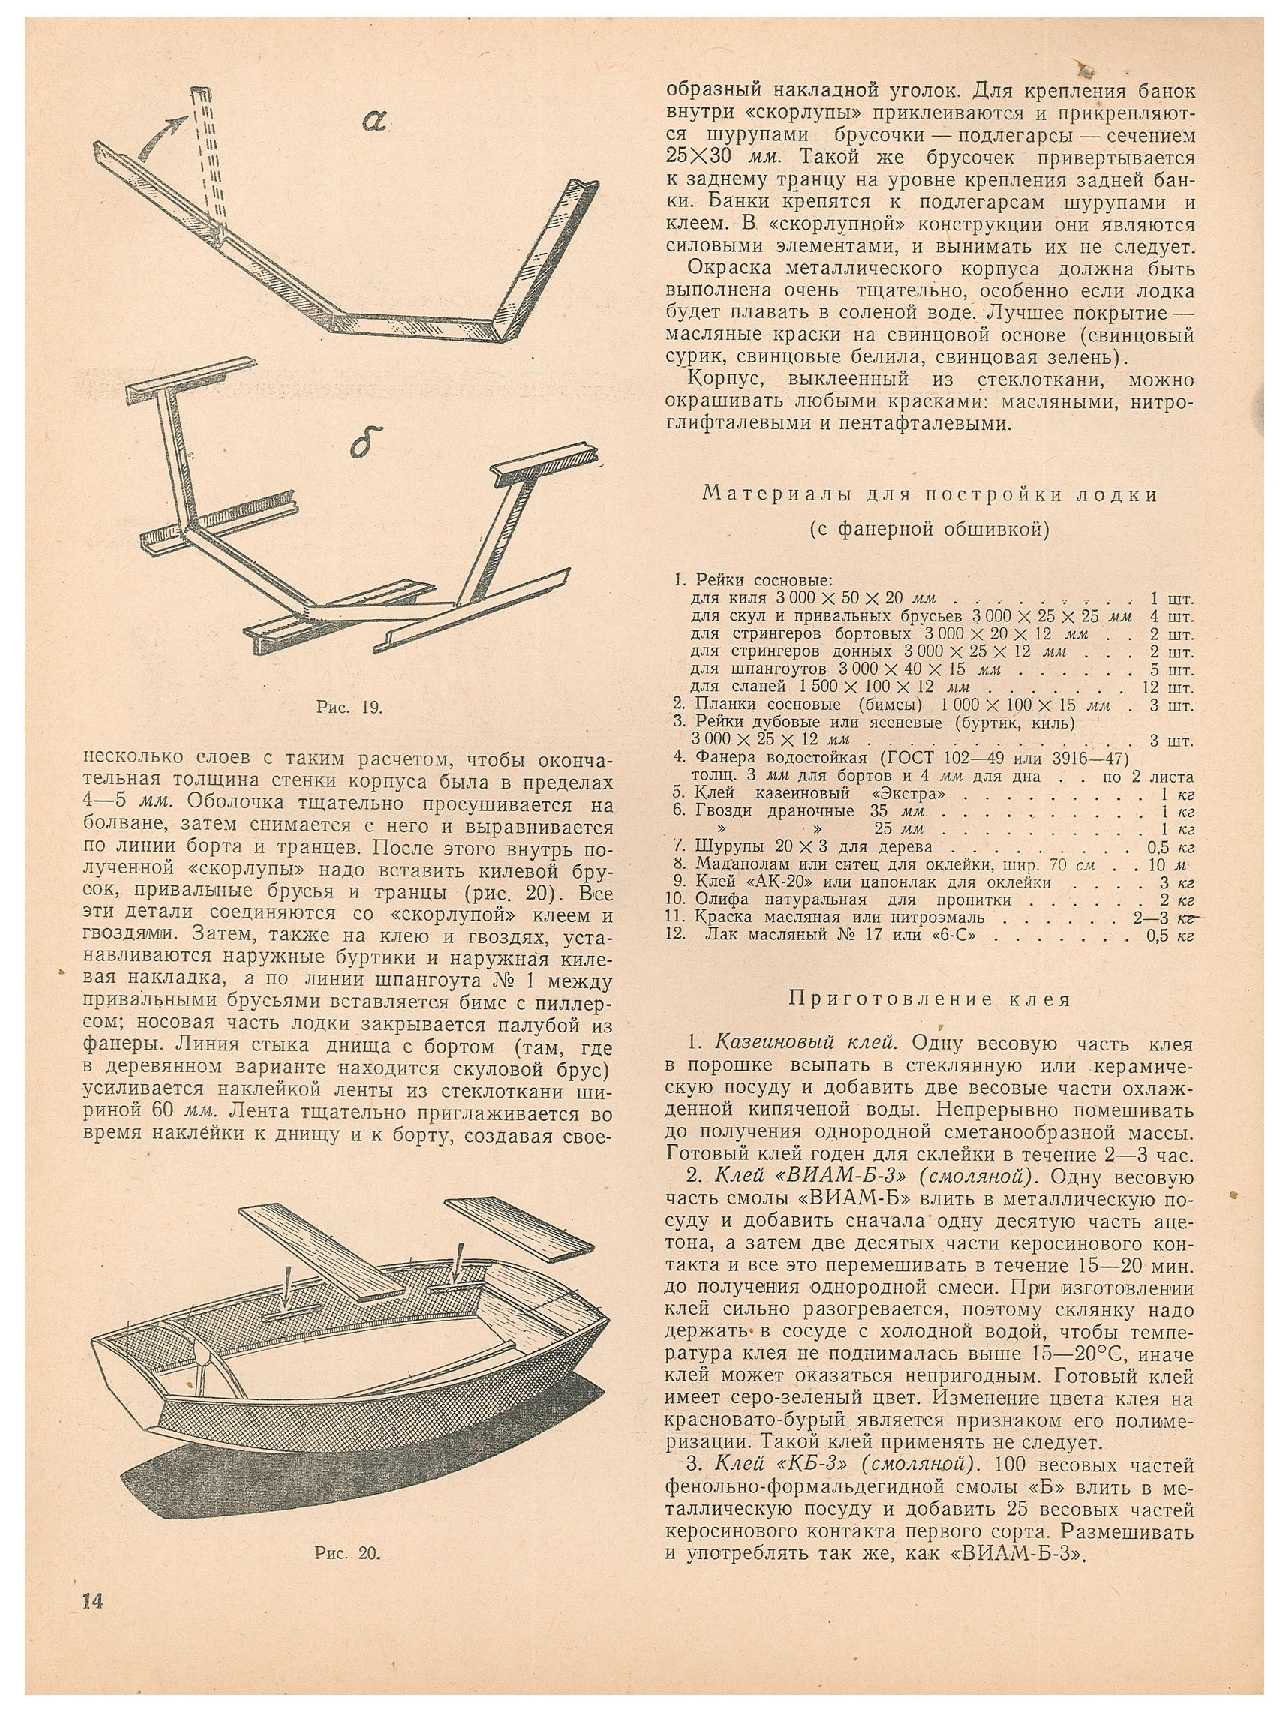 ЮМК 3, 1962, 14 c.